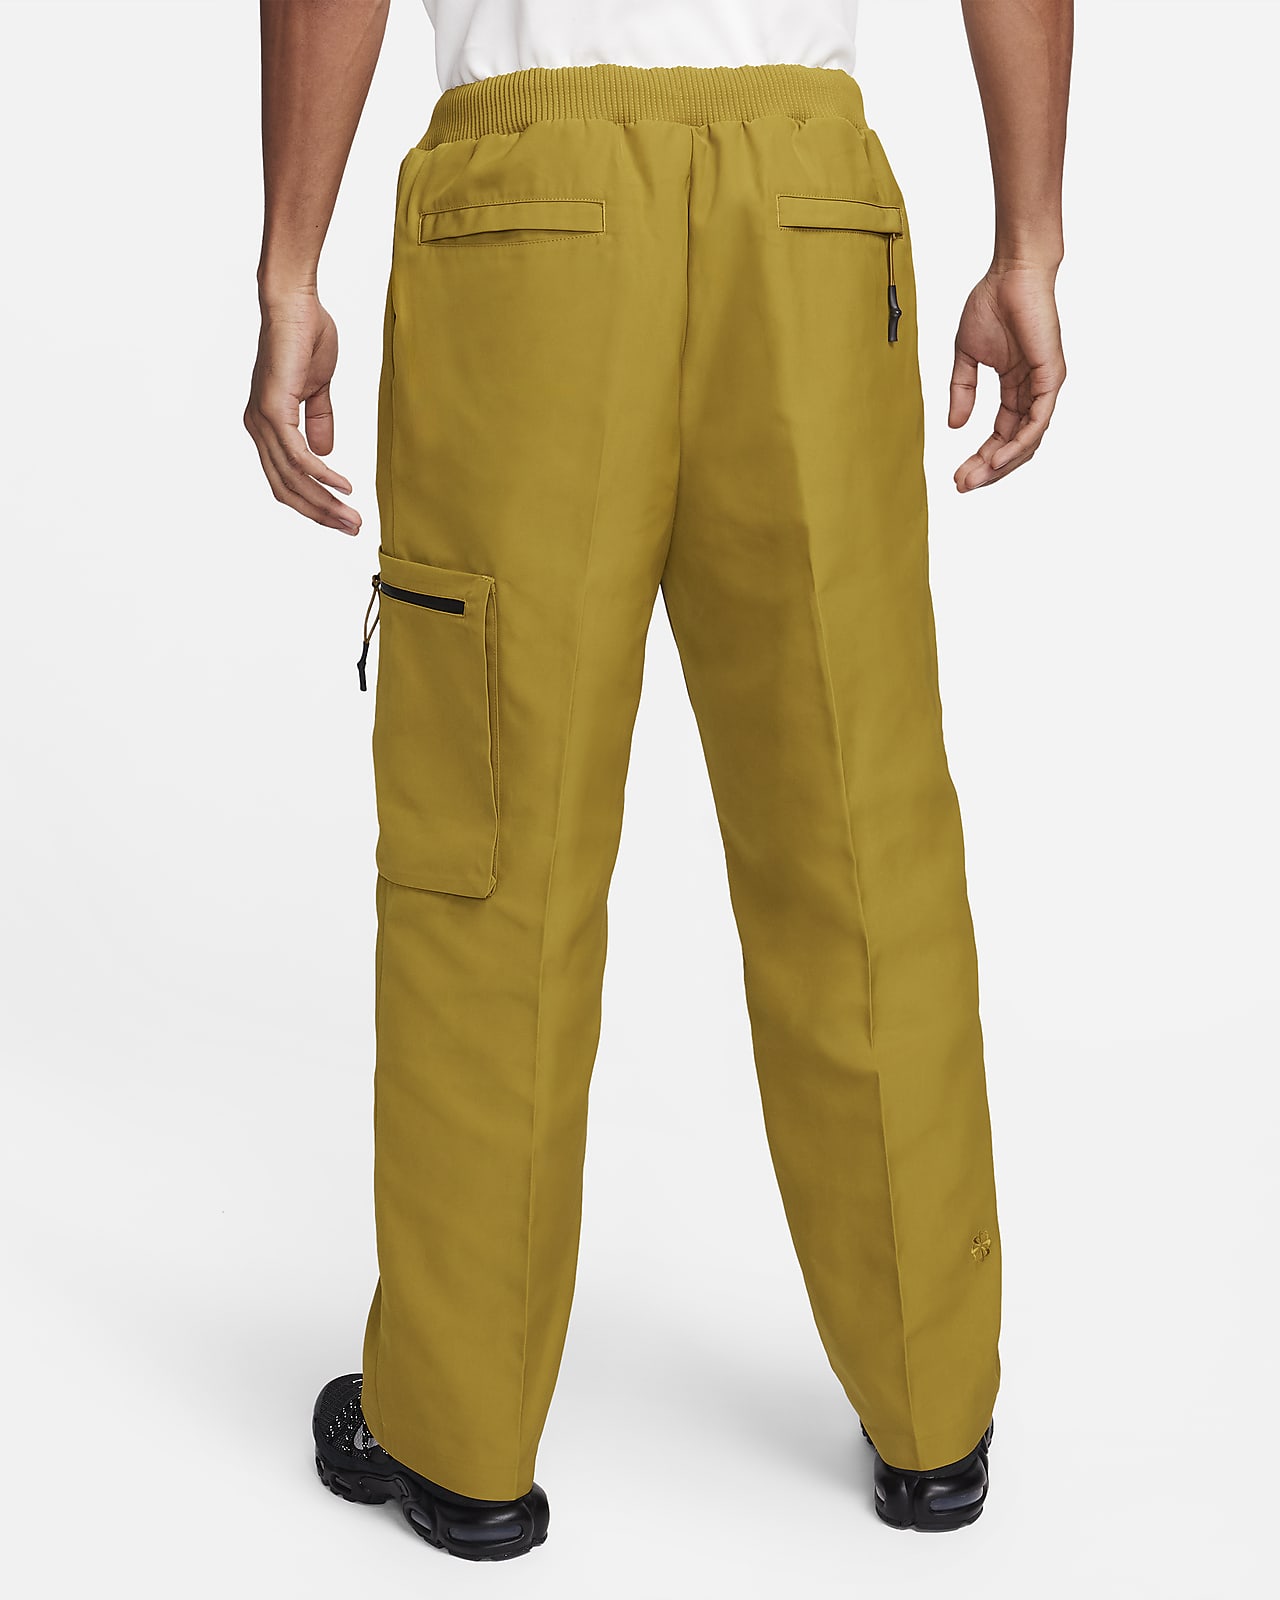 Nike Sportswear Utility Pack Pants. Men\'s Woven Tech